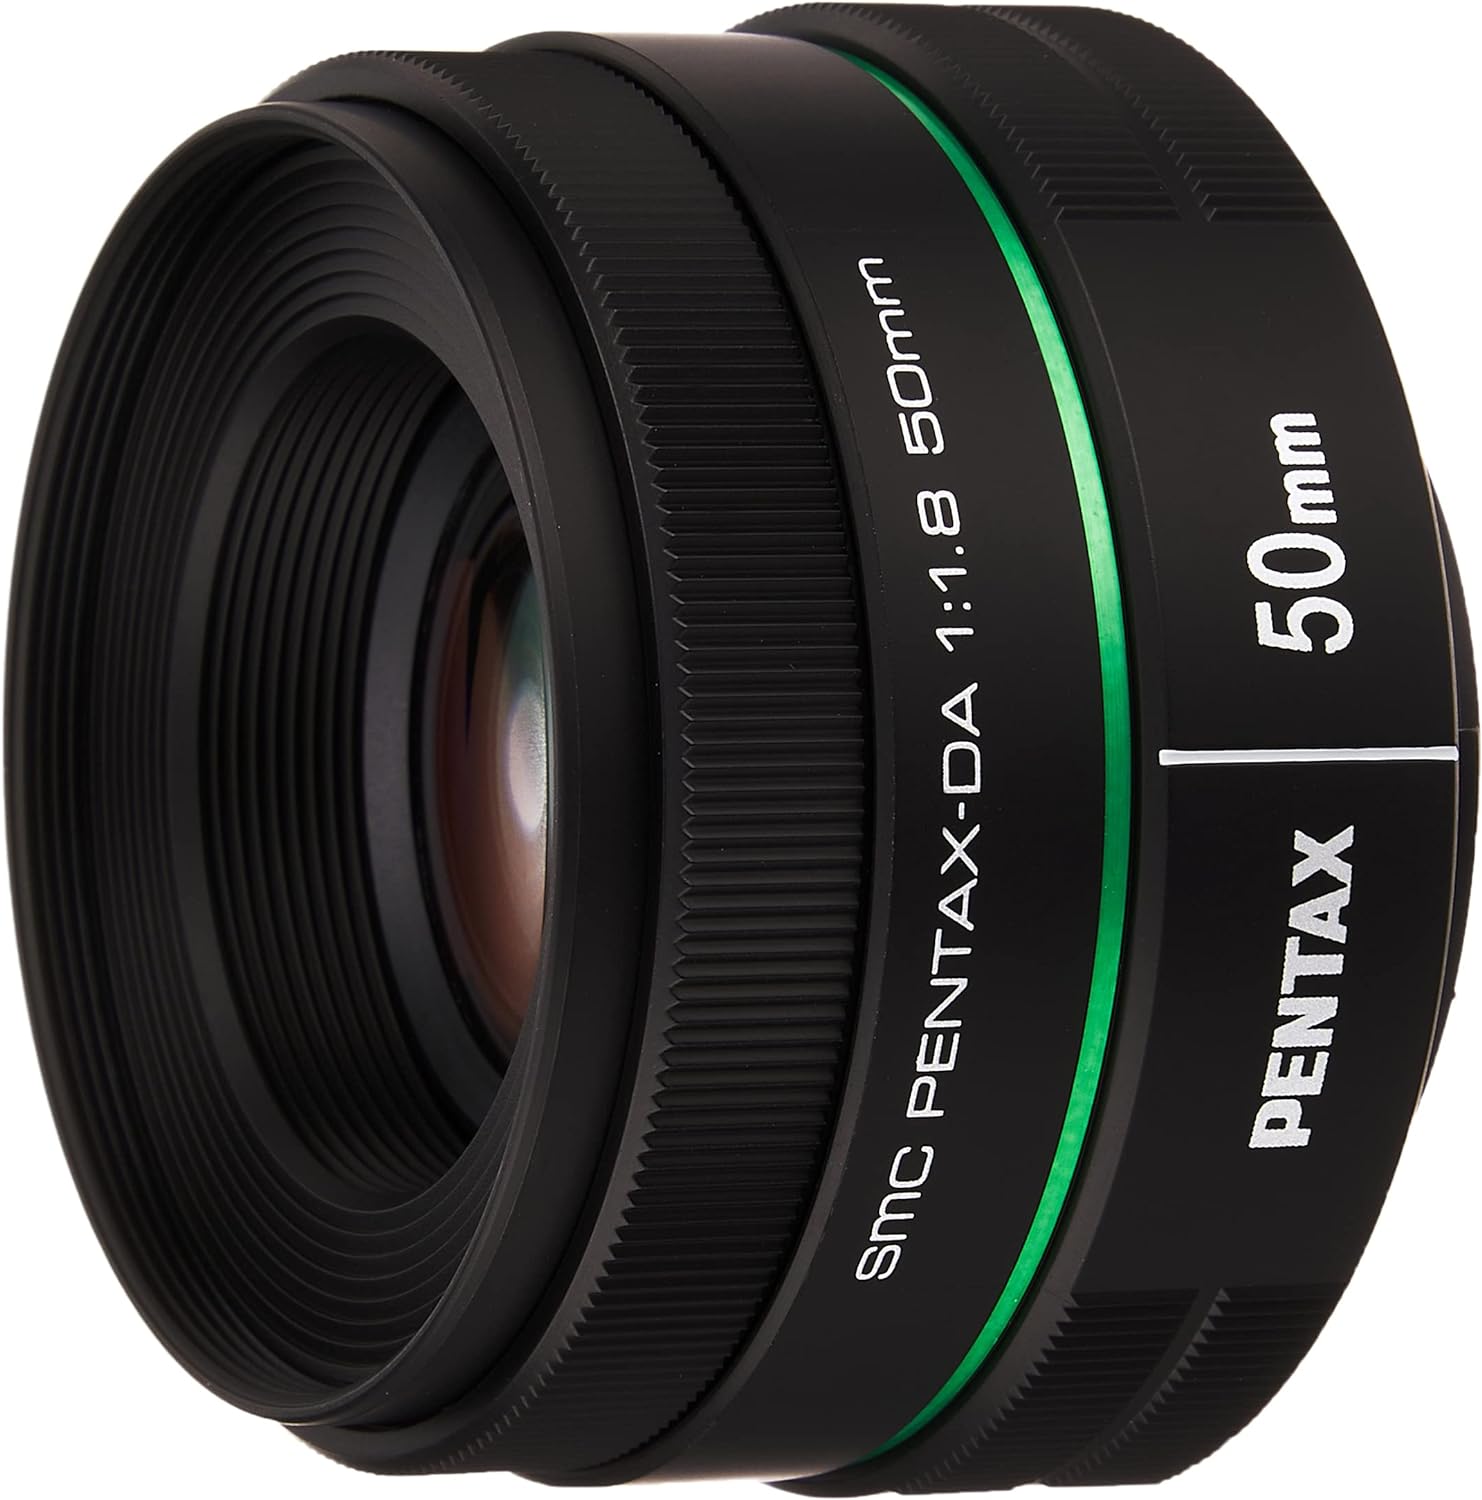 Adapting Pentax K Lenses to Fujifilm X Mount Cameras